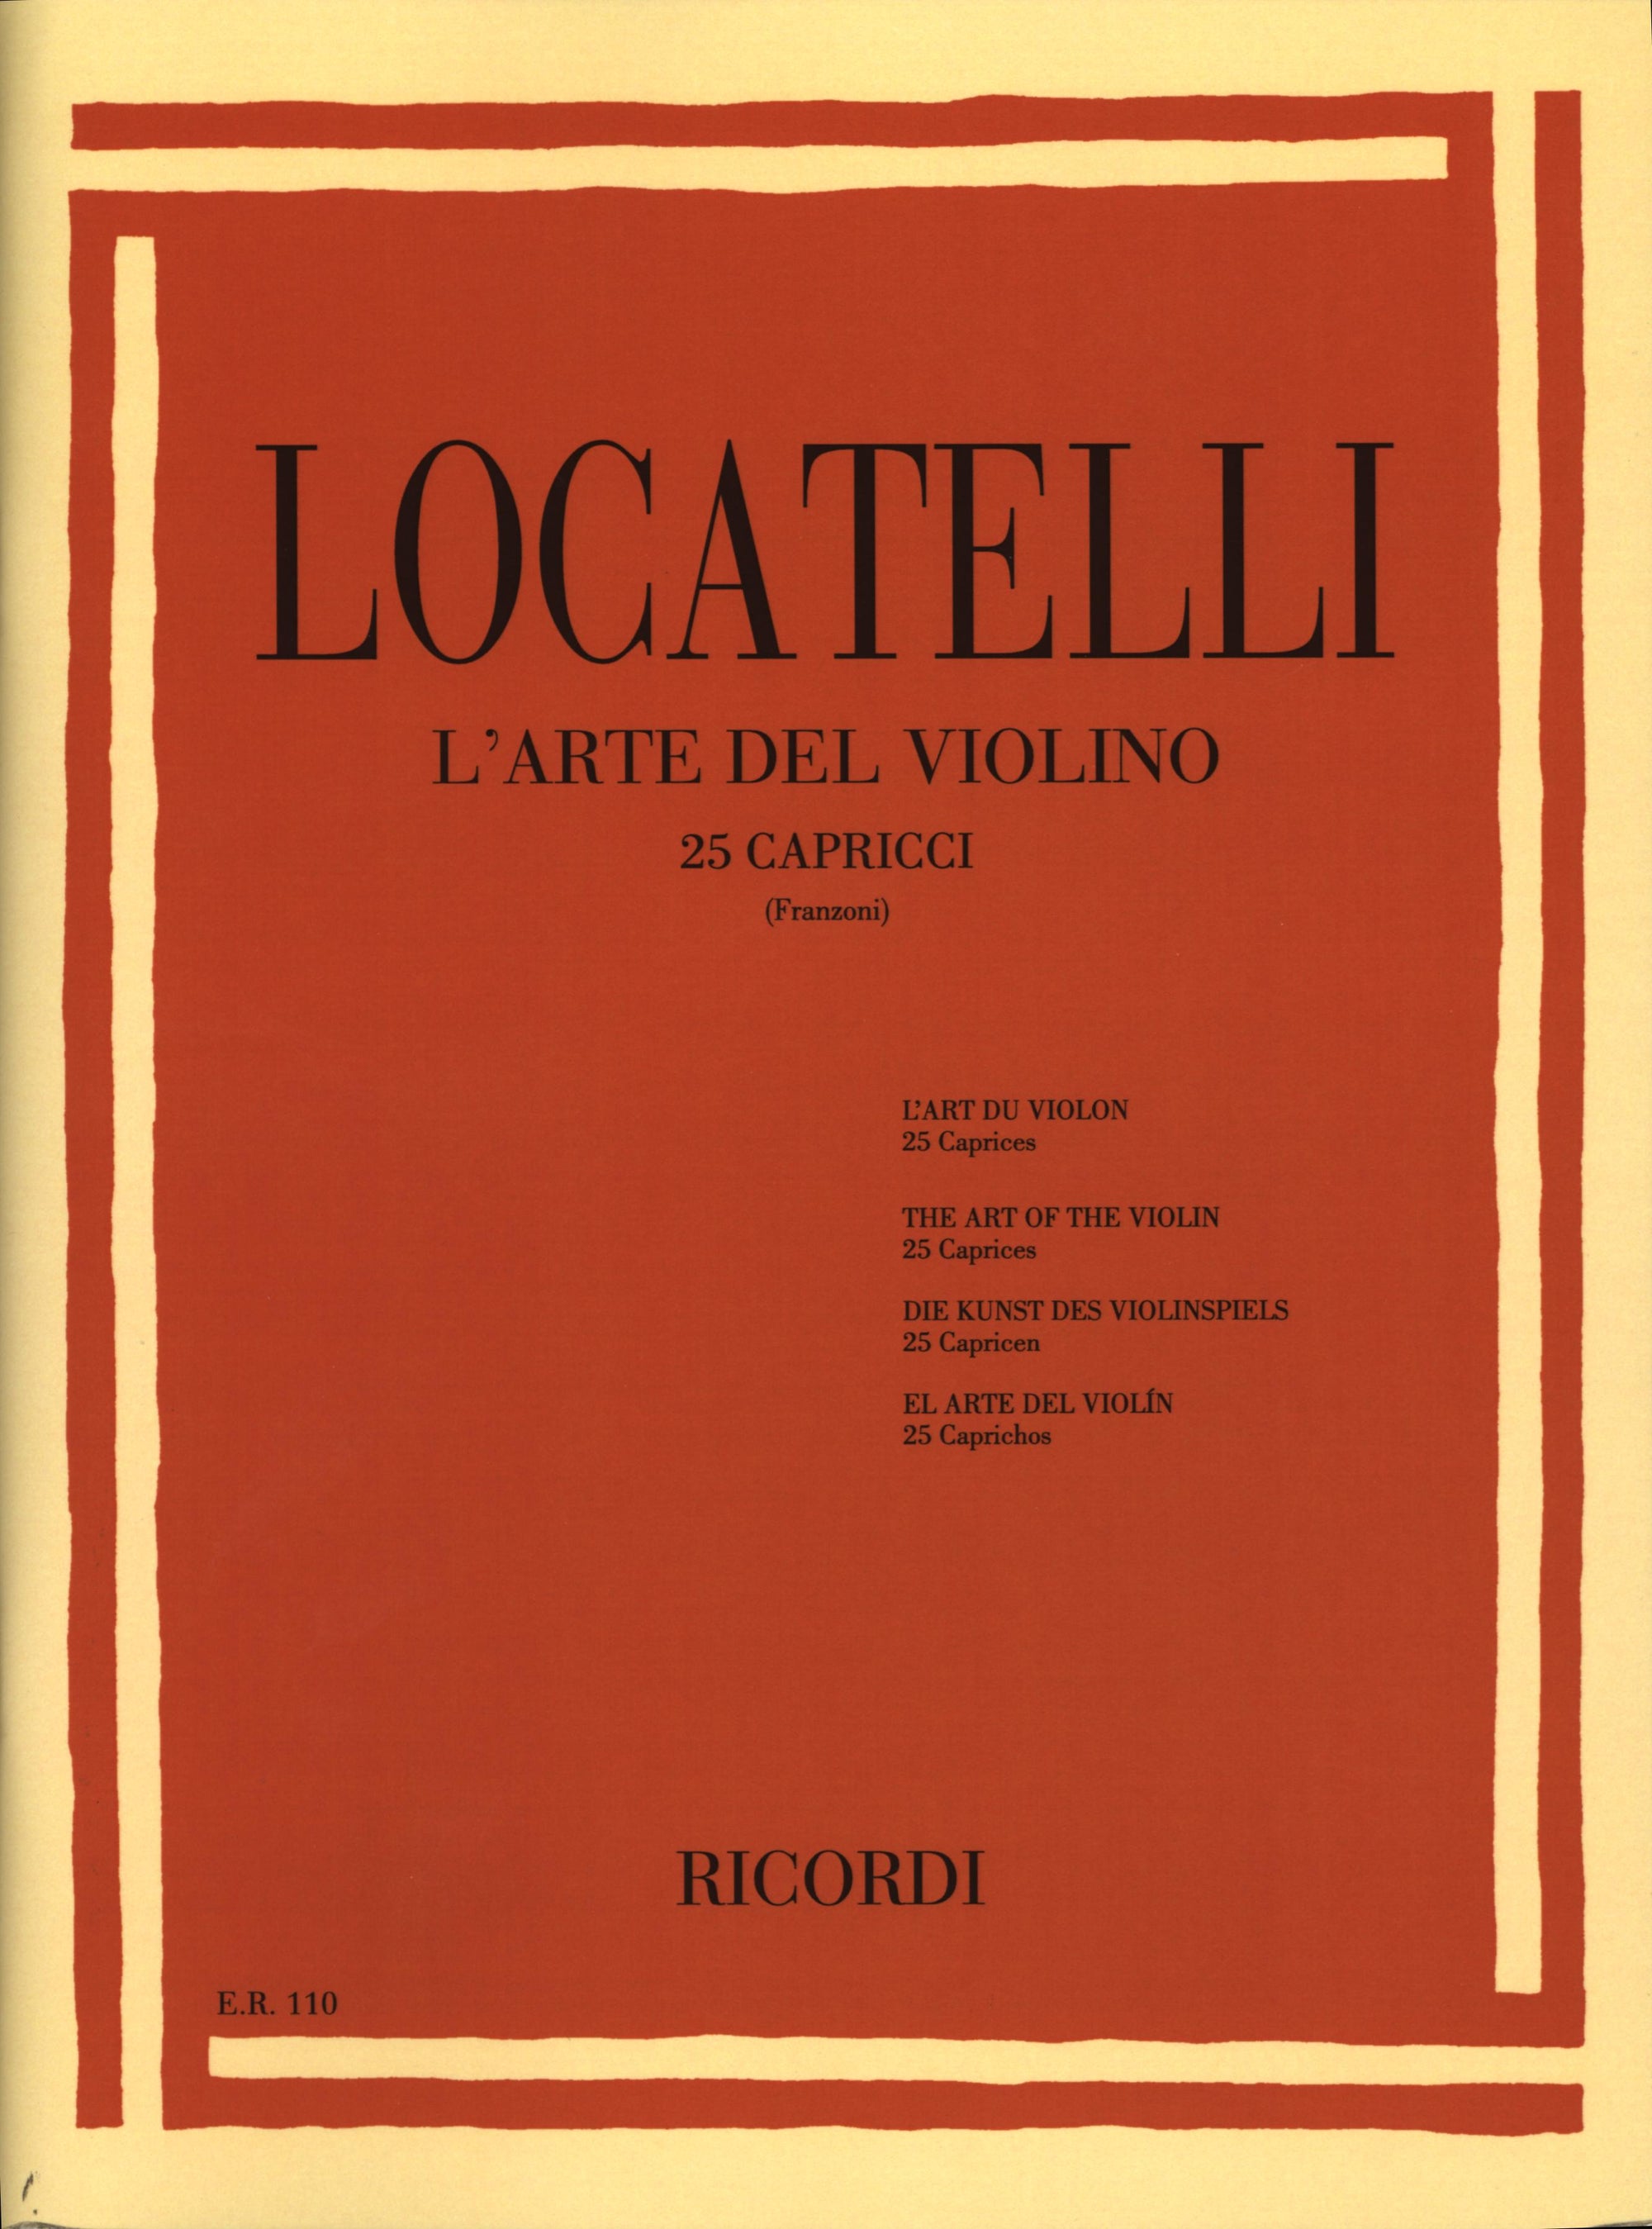 Locatelli: The Art of the Violin - 25 Caprices